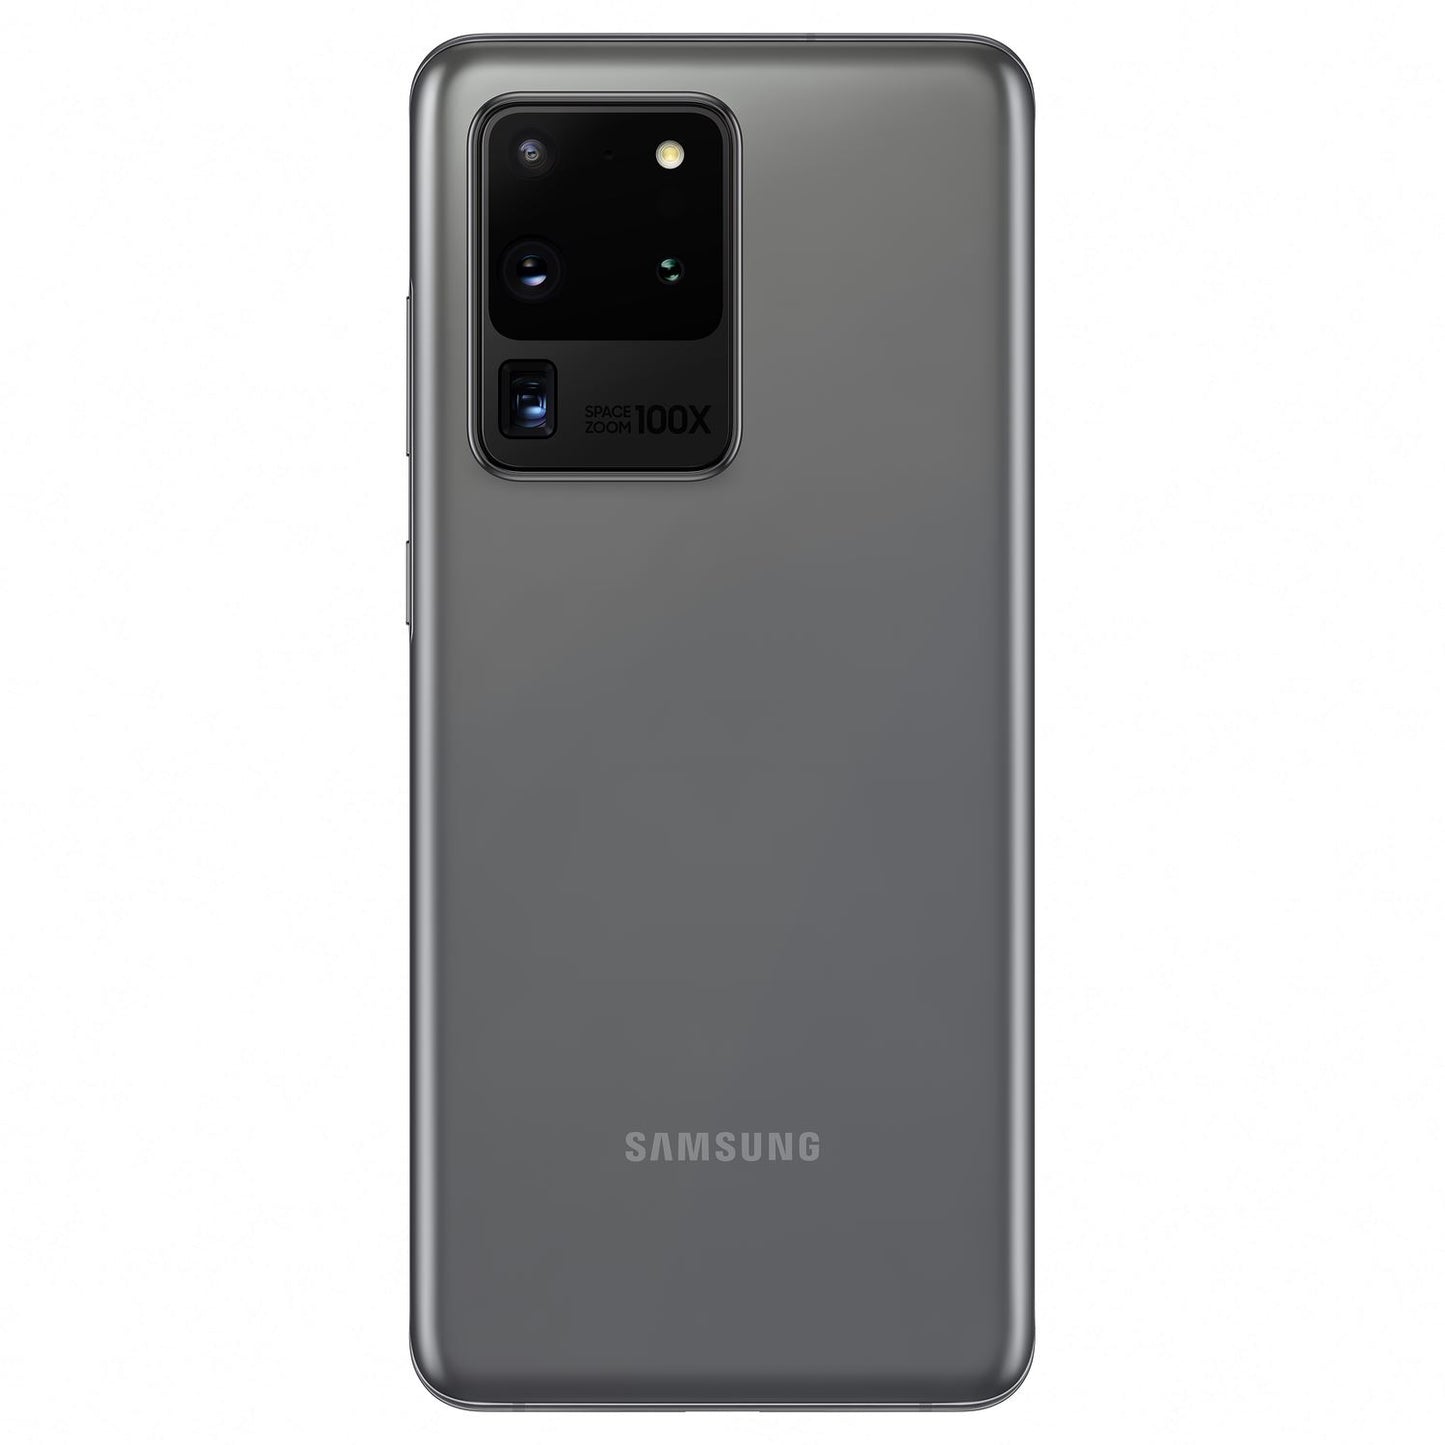 Samsung Galaxy S20 Ultra 5G Smartphone Unlocked 6.9" Android